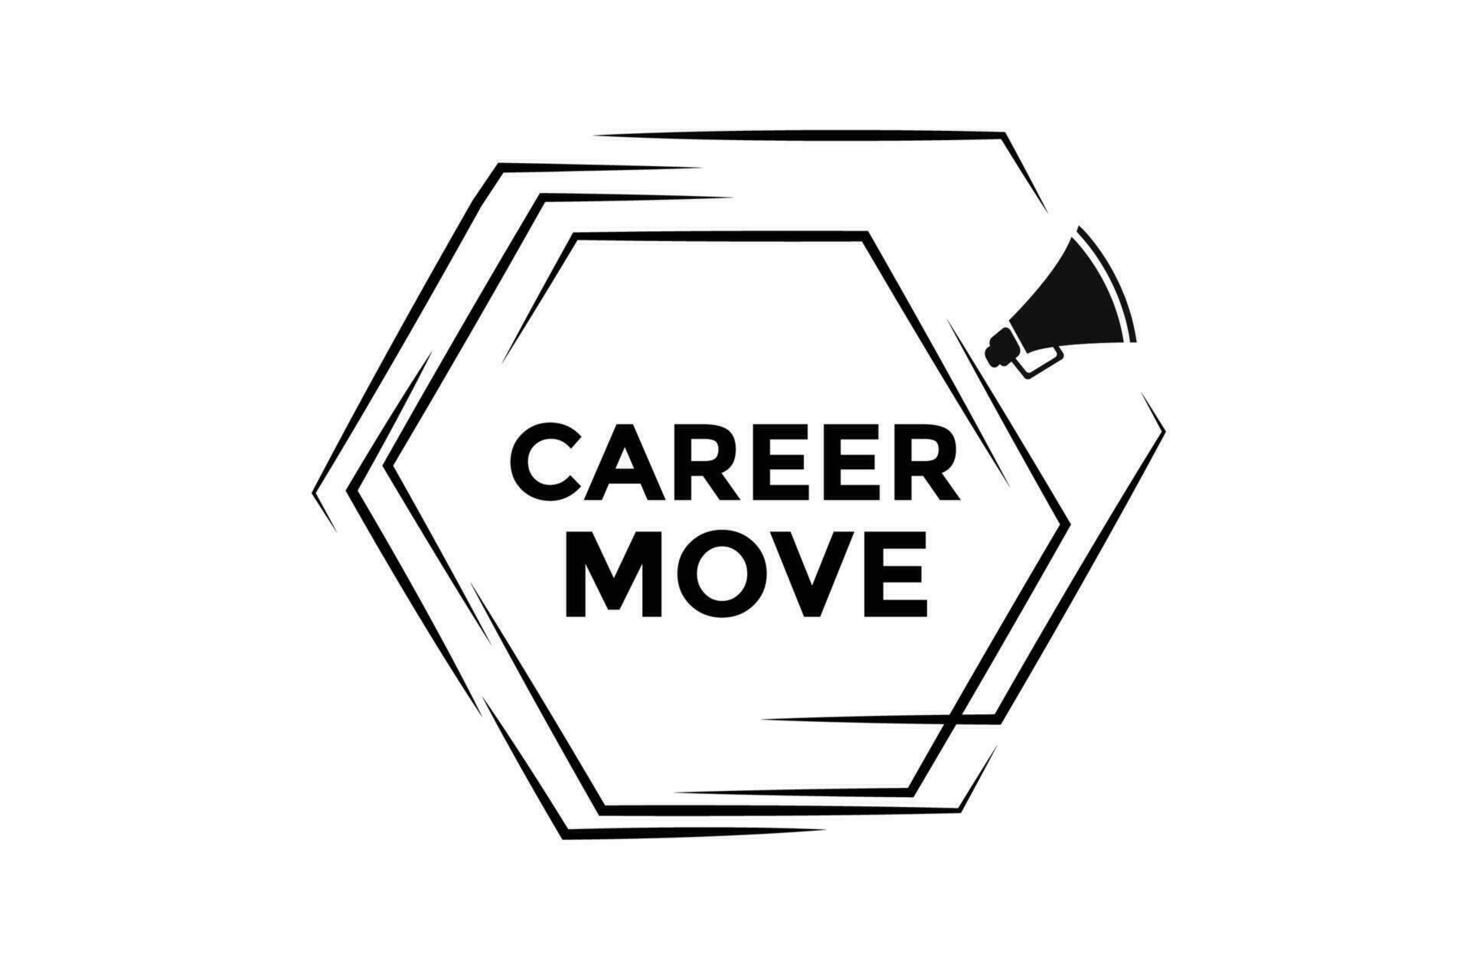 Career move button web banner templates. Vector Illustration